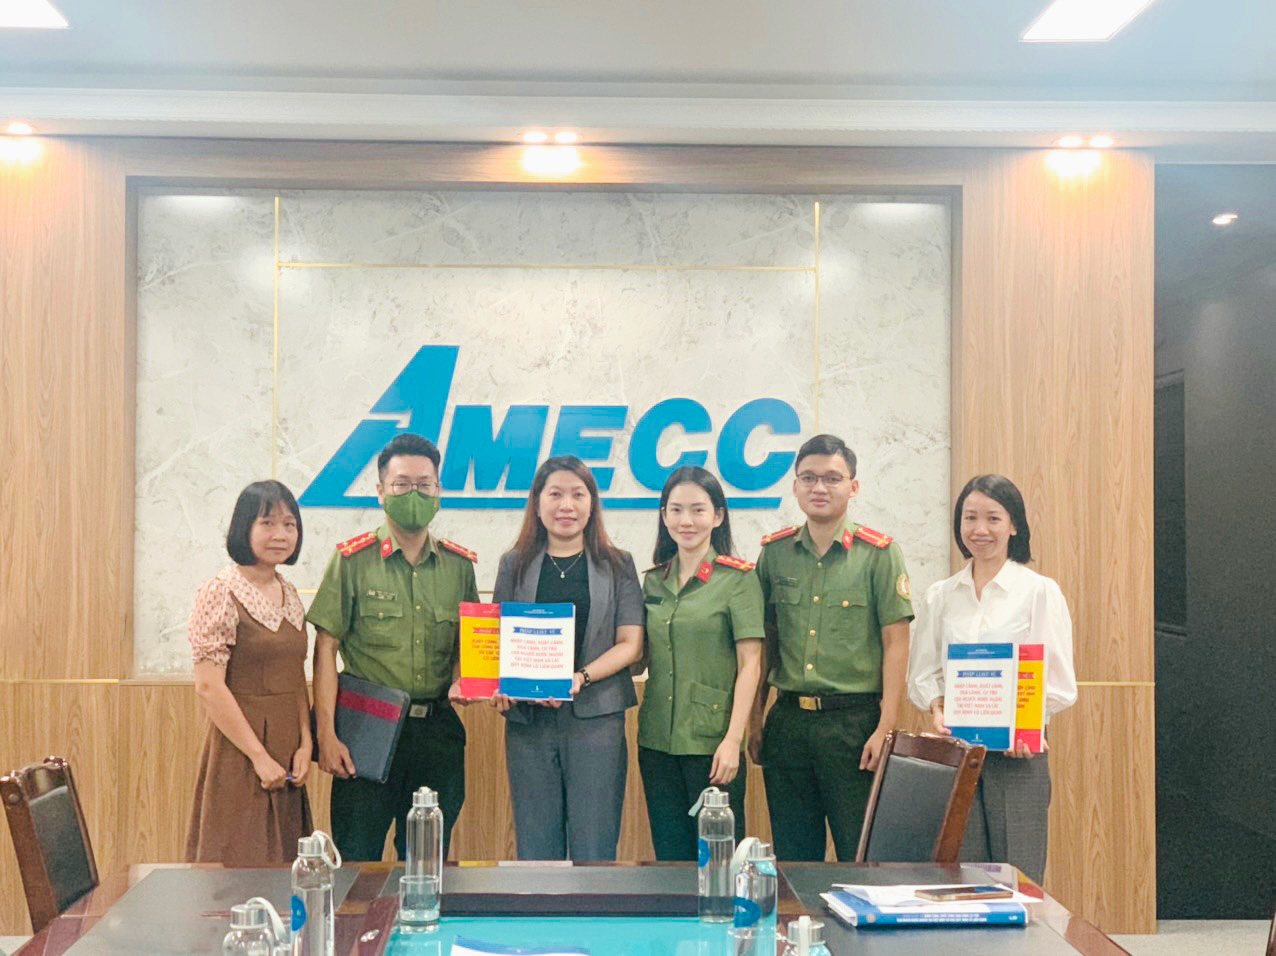 Amecc - organizing training courses for customs management profession